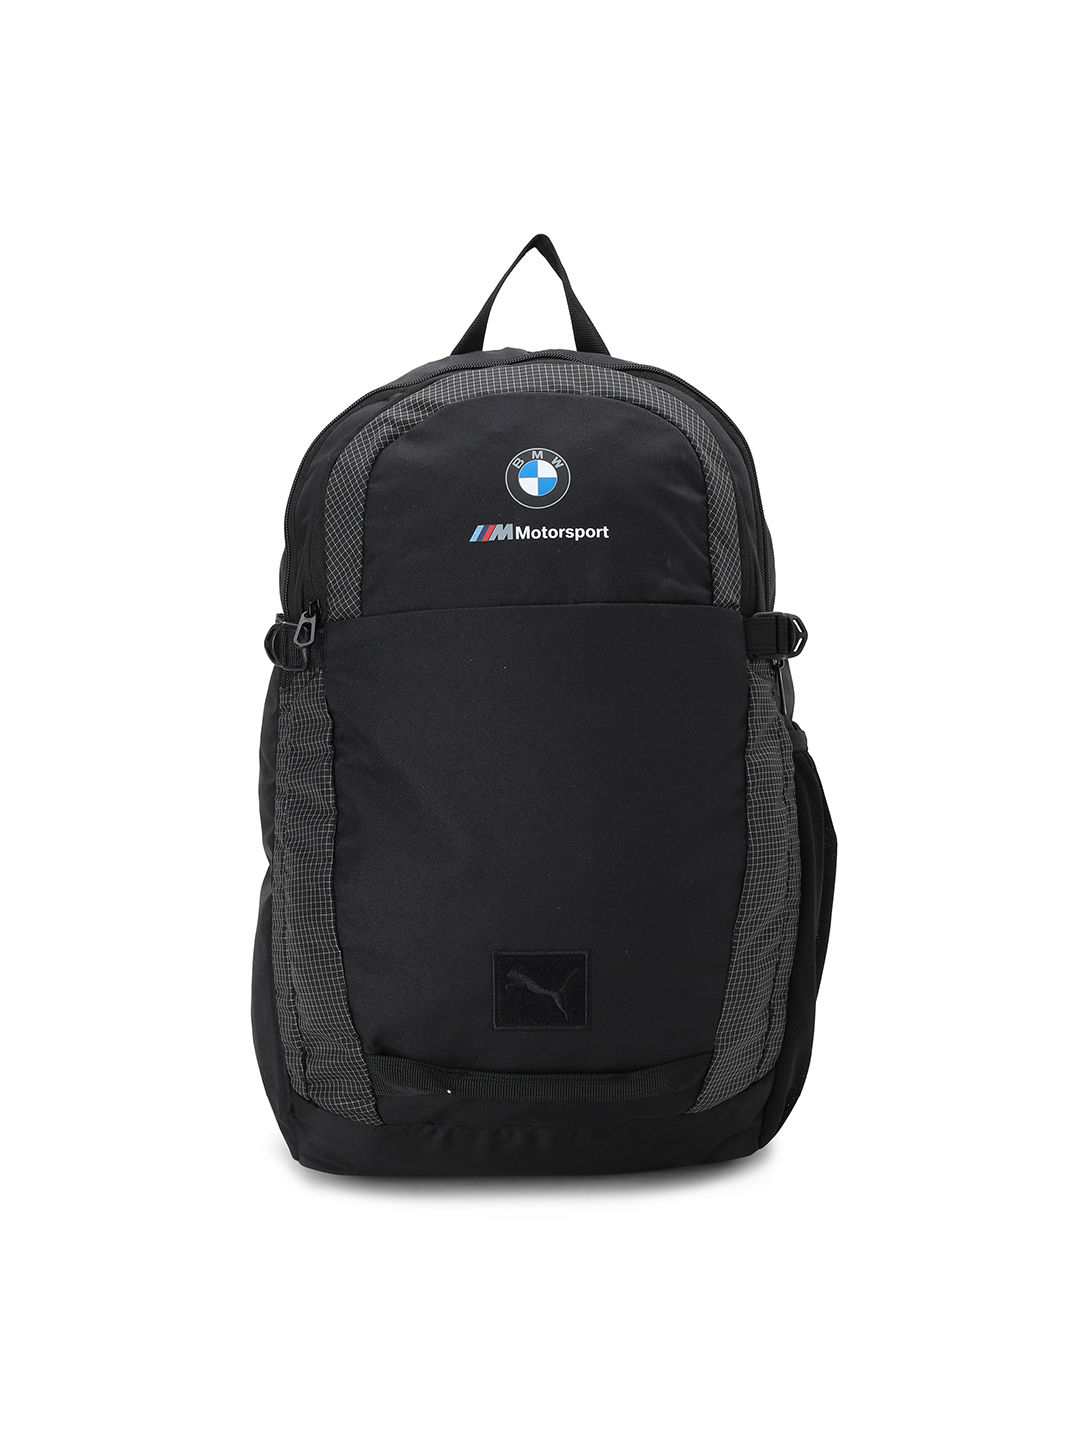 puma bmw backpack online